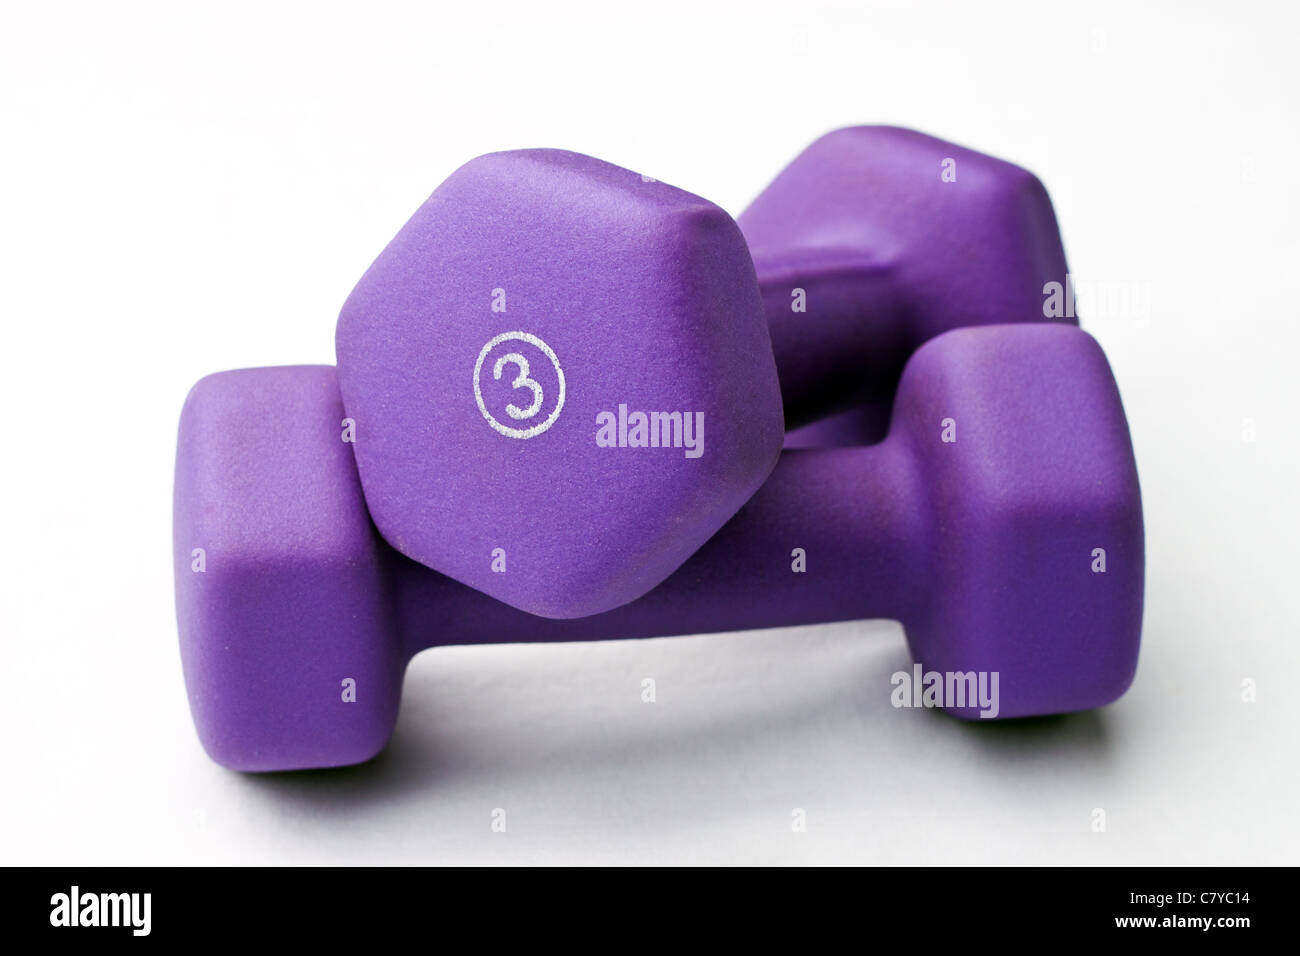 Un par de 3 lb púrpura pesas de neopreno apilados contra un fondo blanco. Foto de stock